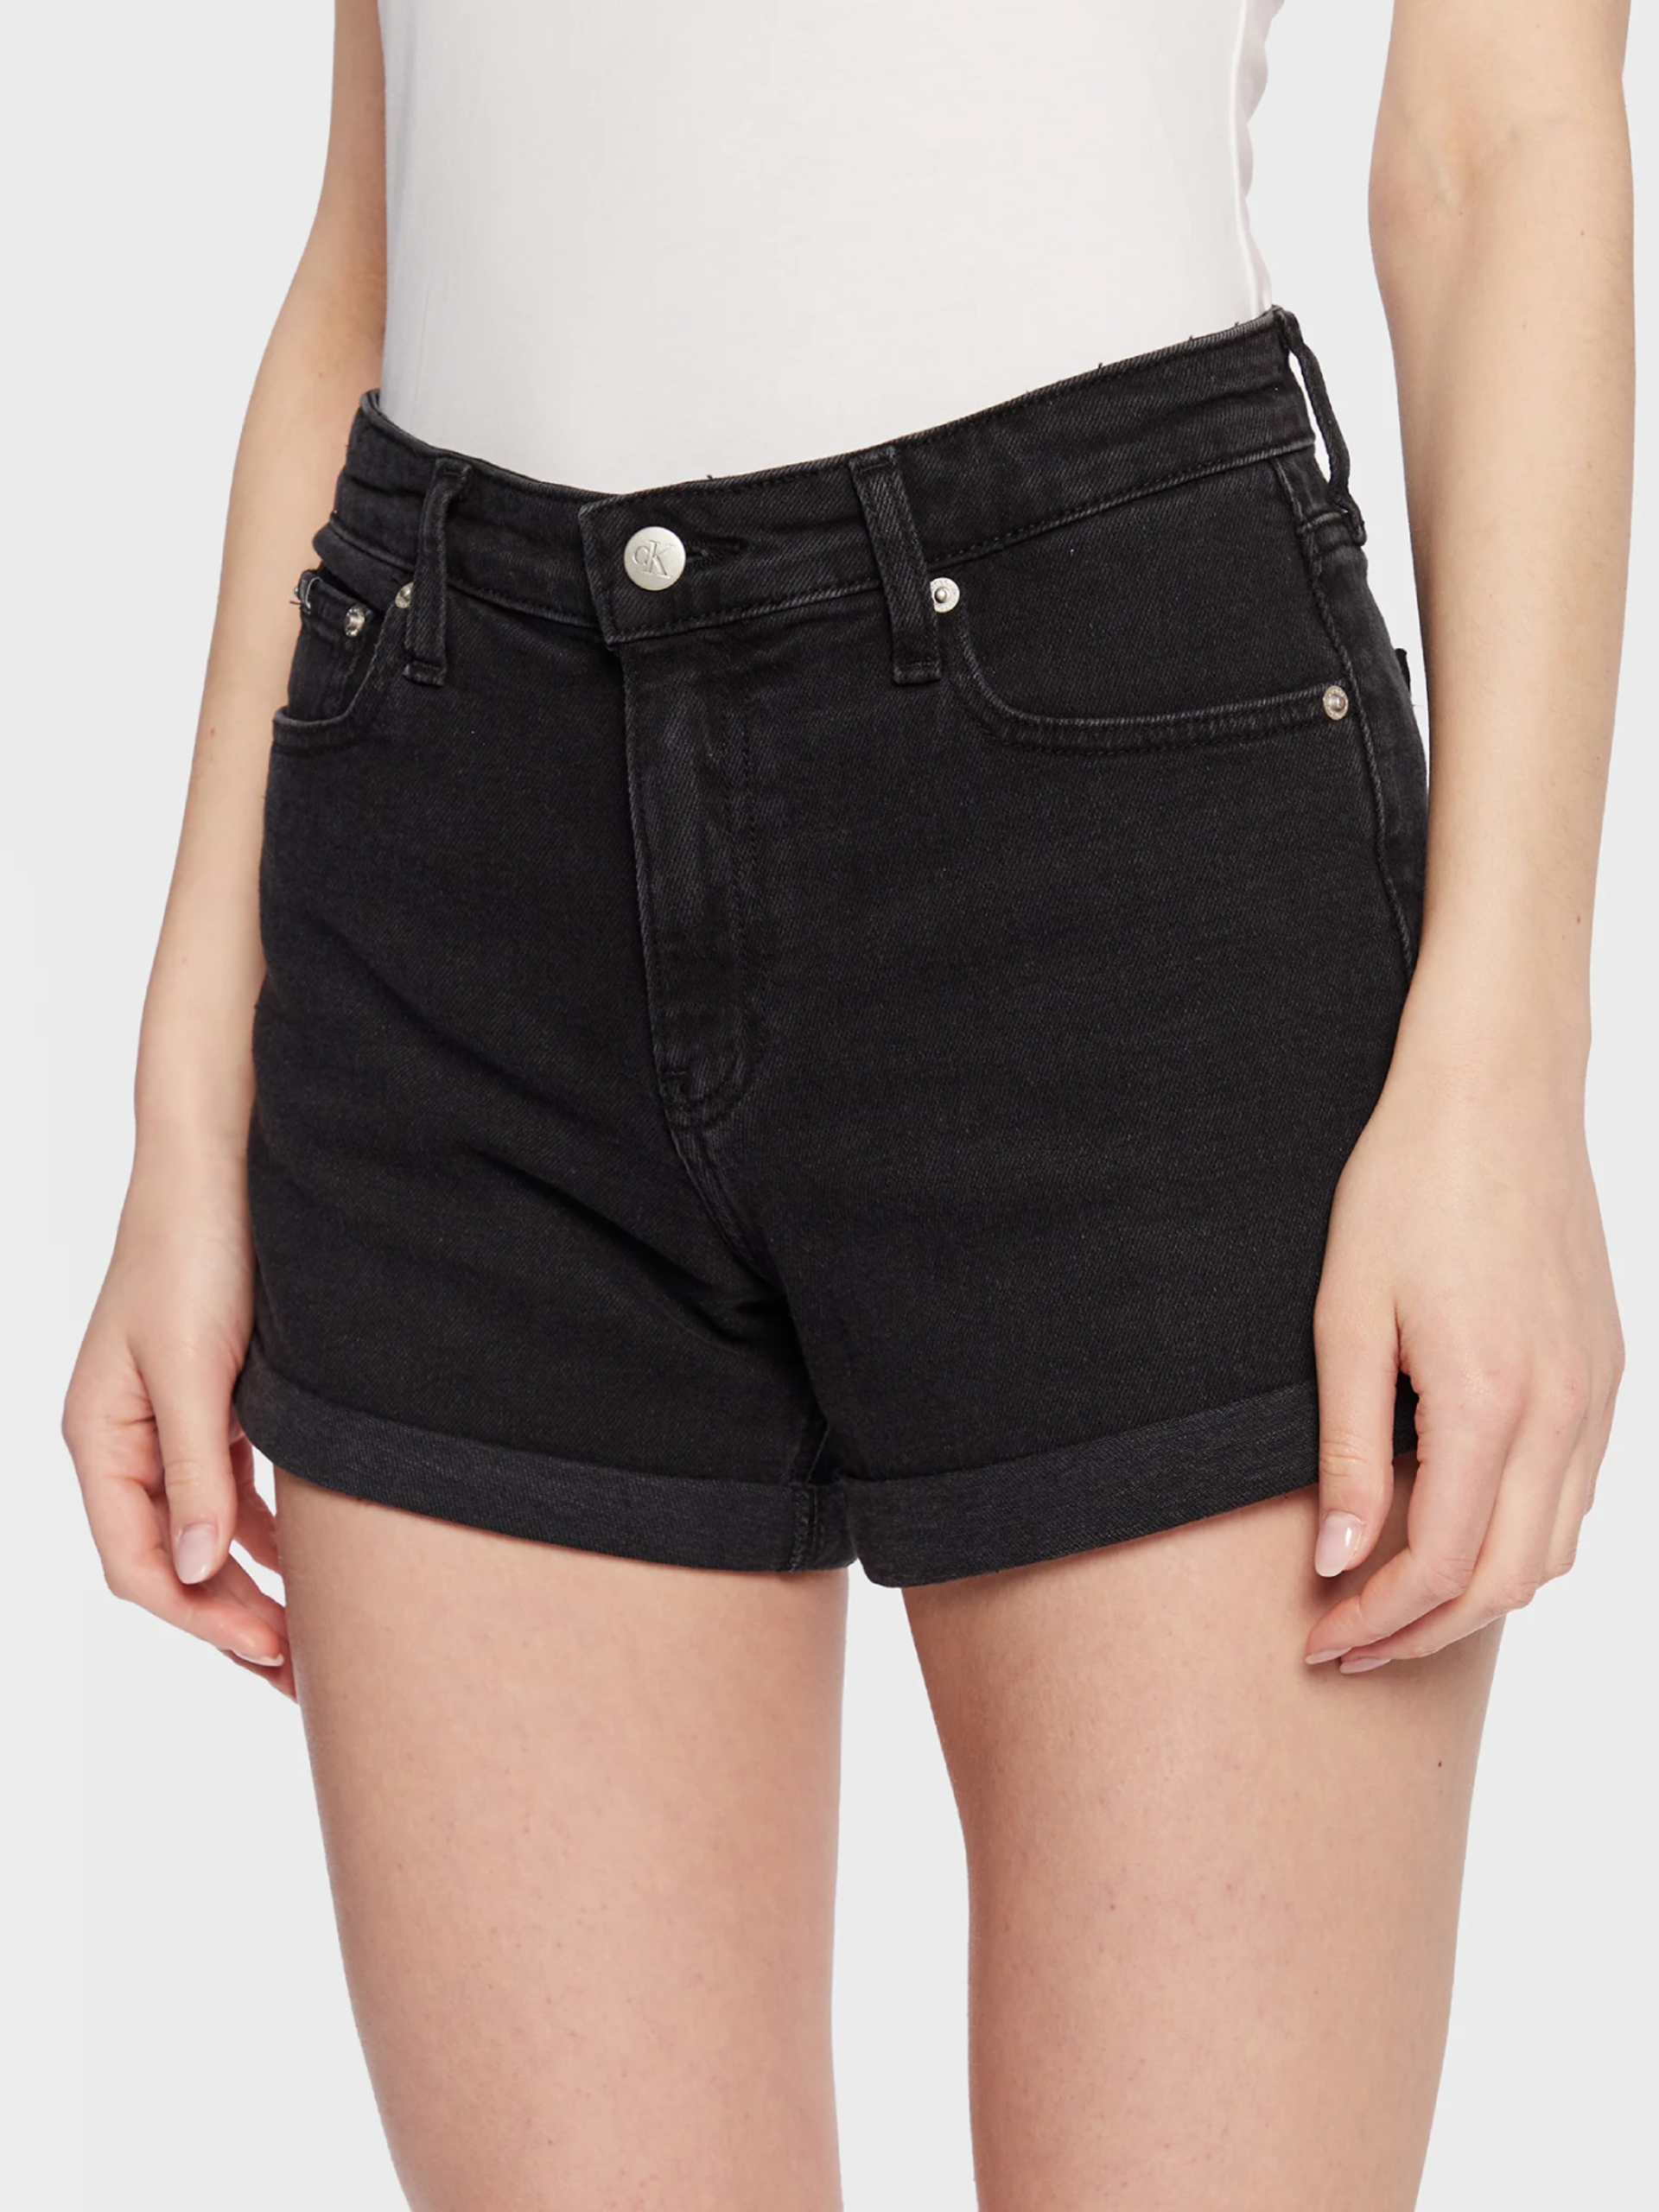 Calvin Klein dámské černé džínové šortky - 30/NI (1BY)